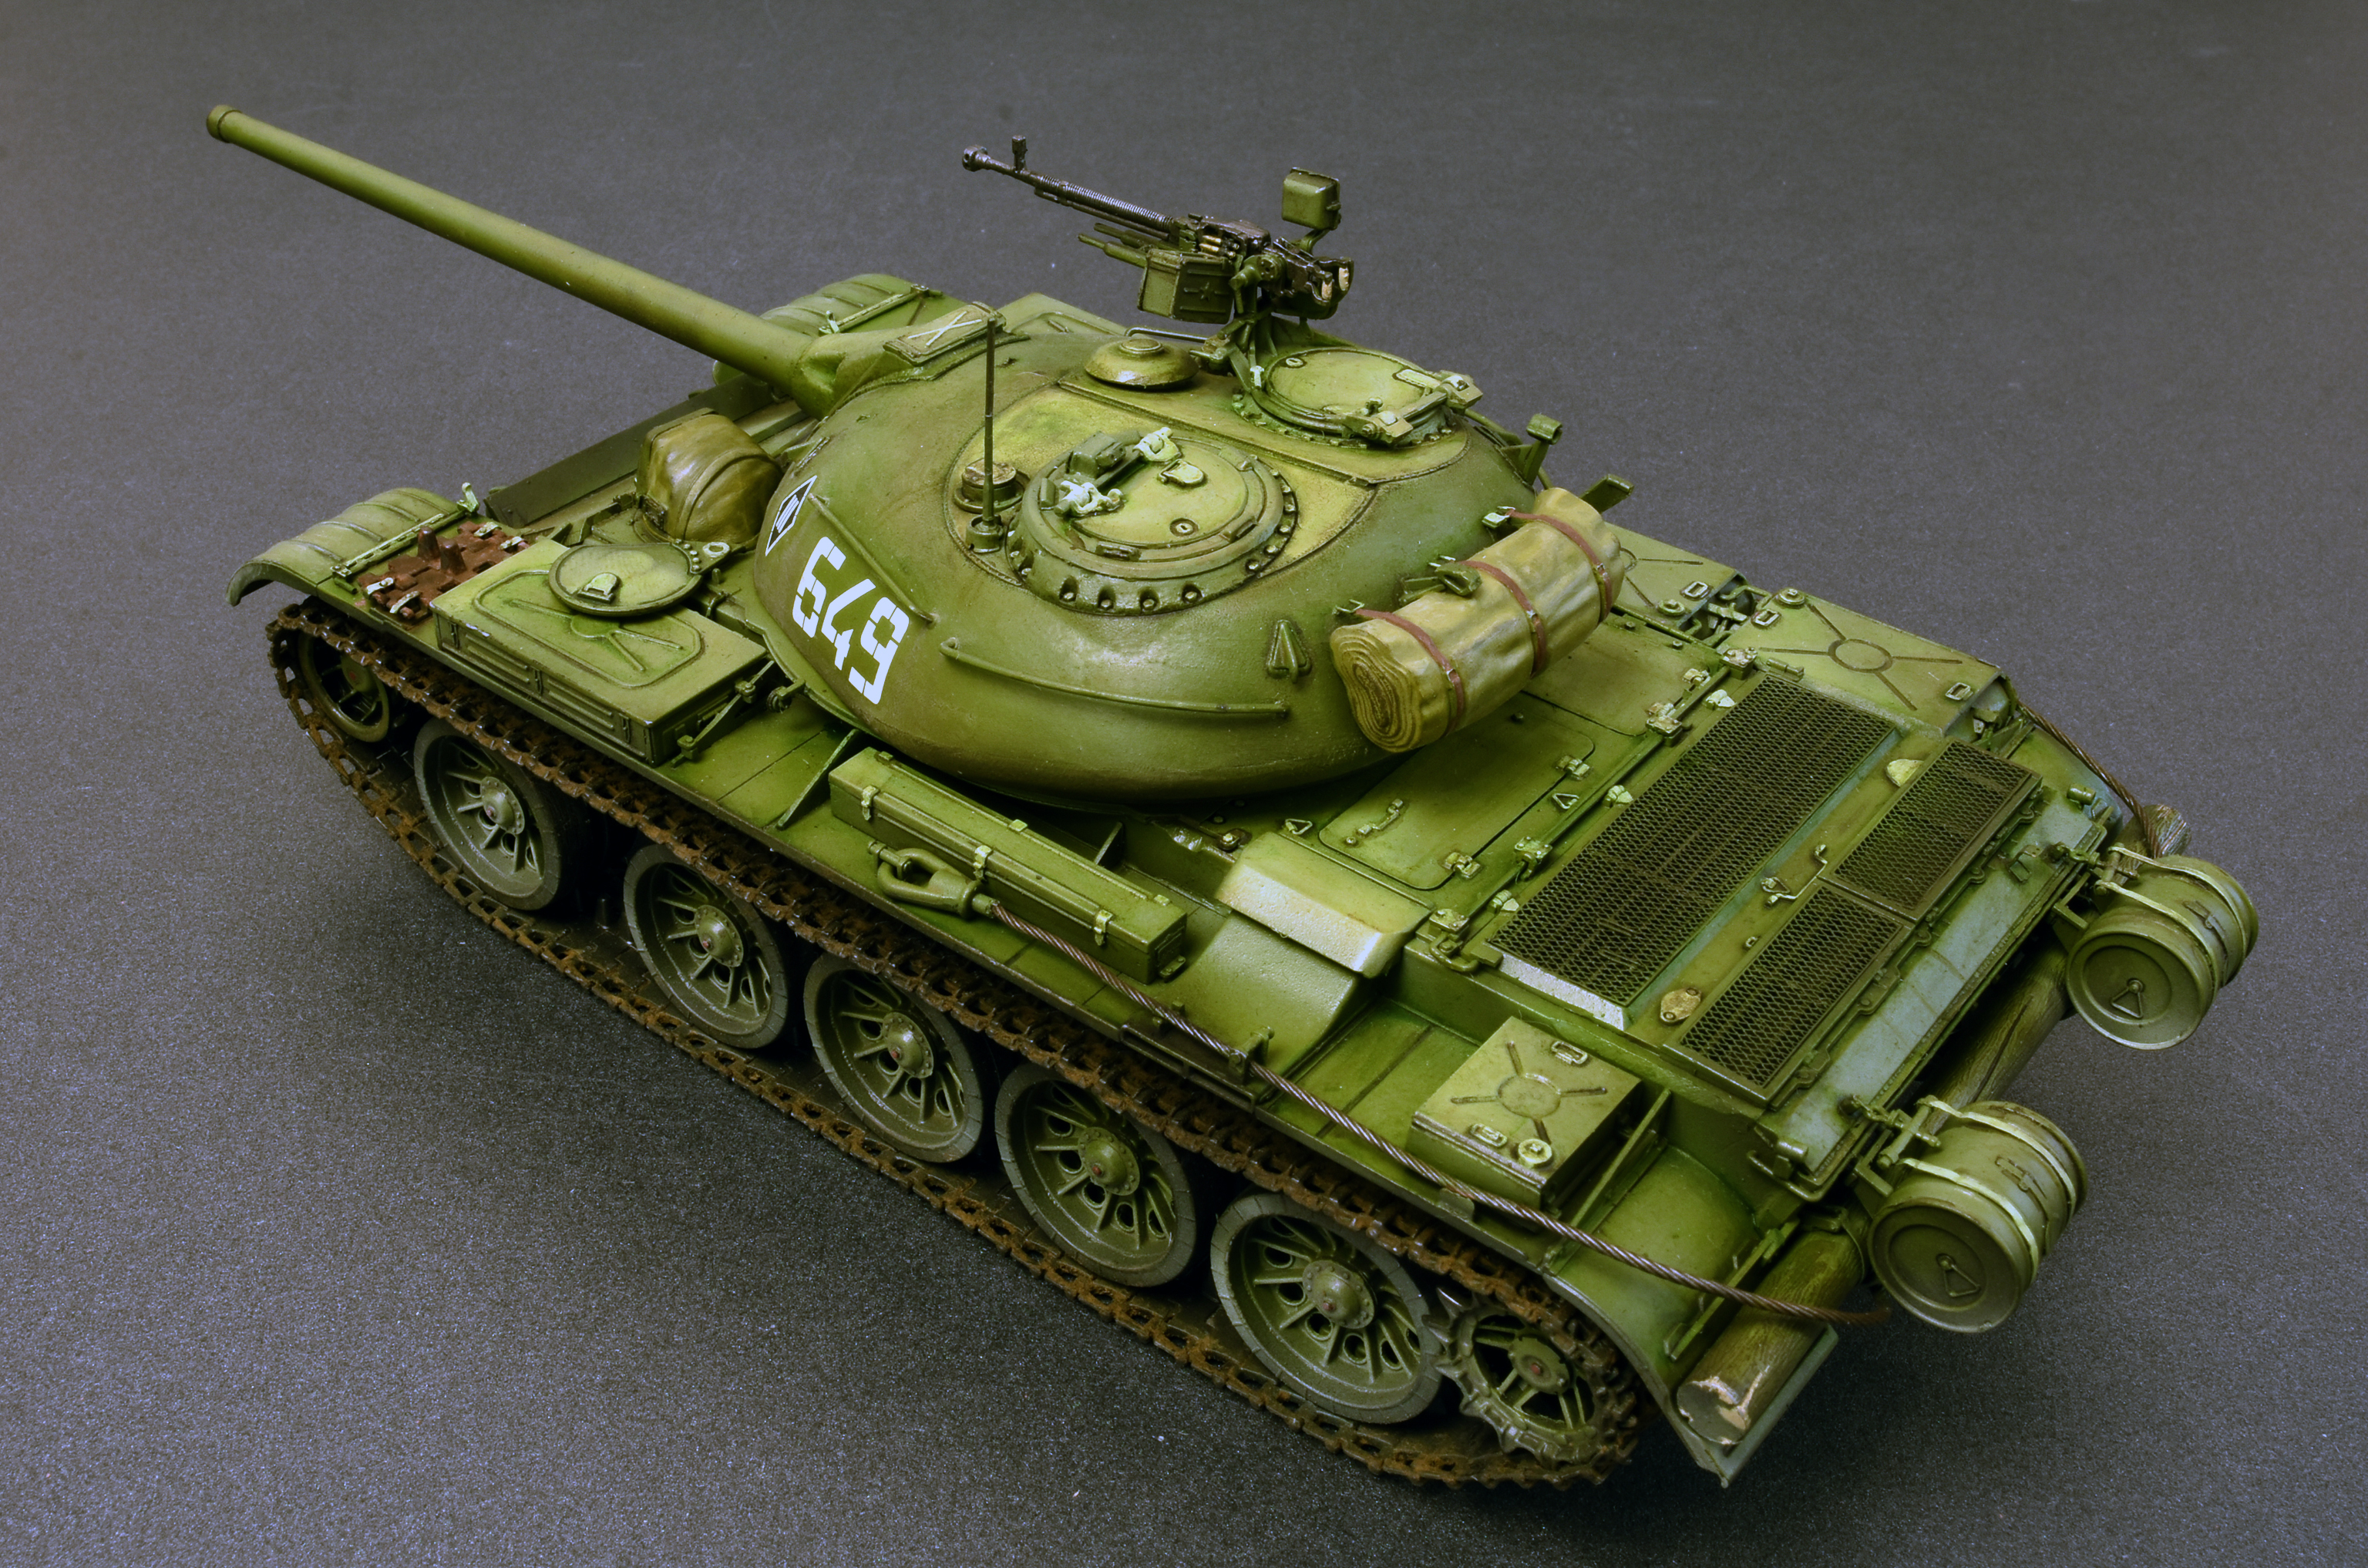 Miniart 37012 1:35th scale T-54-2 Soviet Medium Tank Mod 1949 